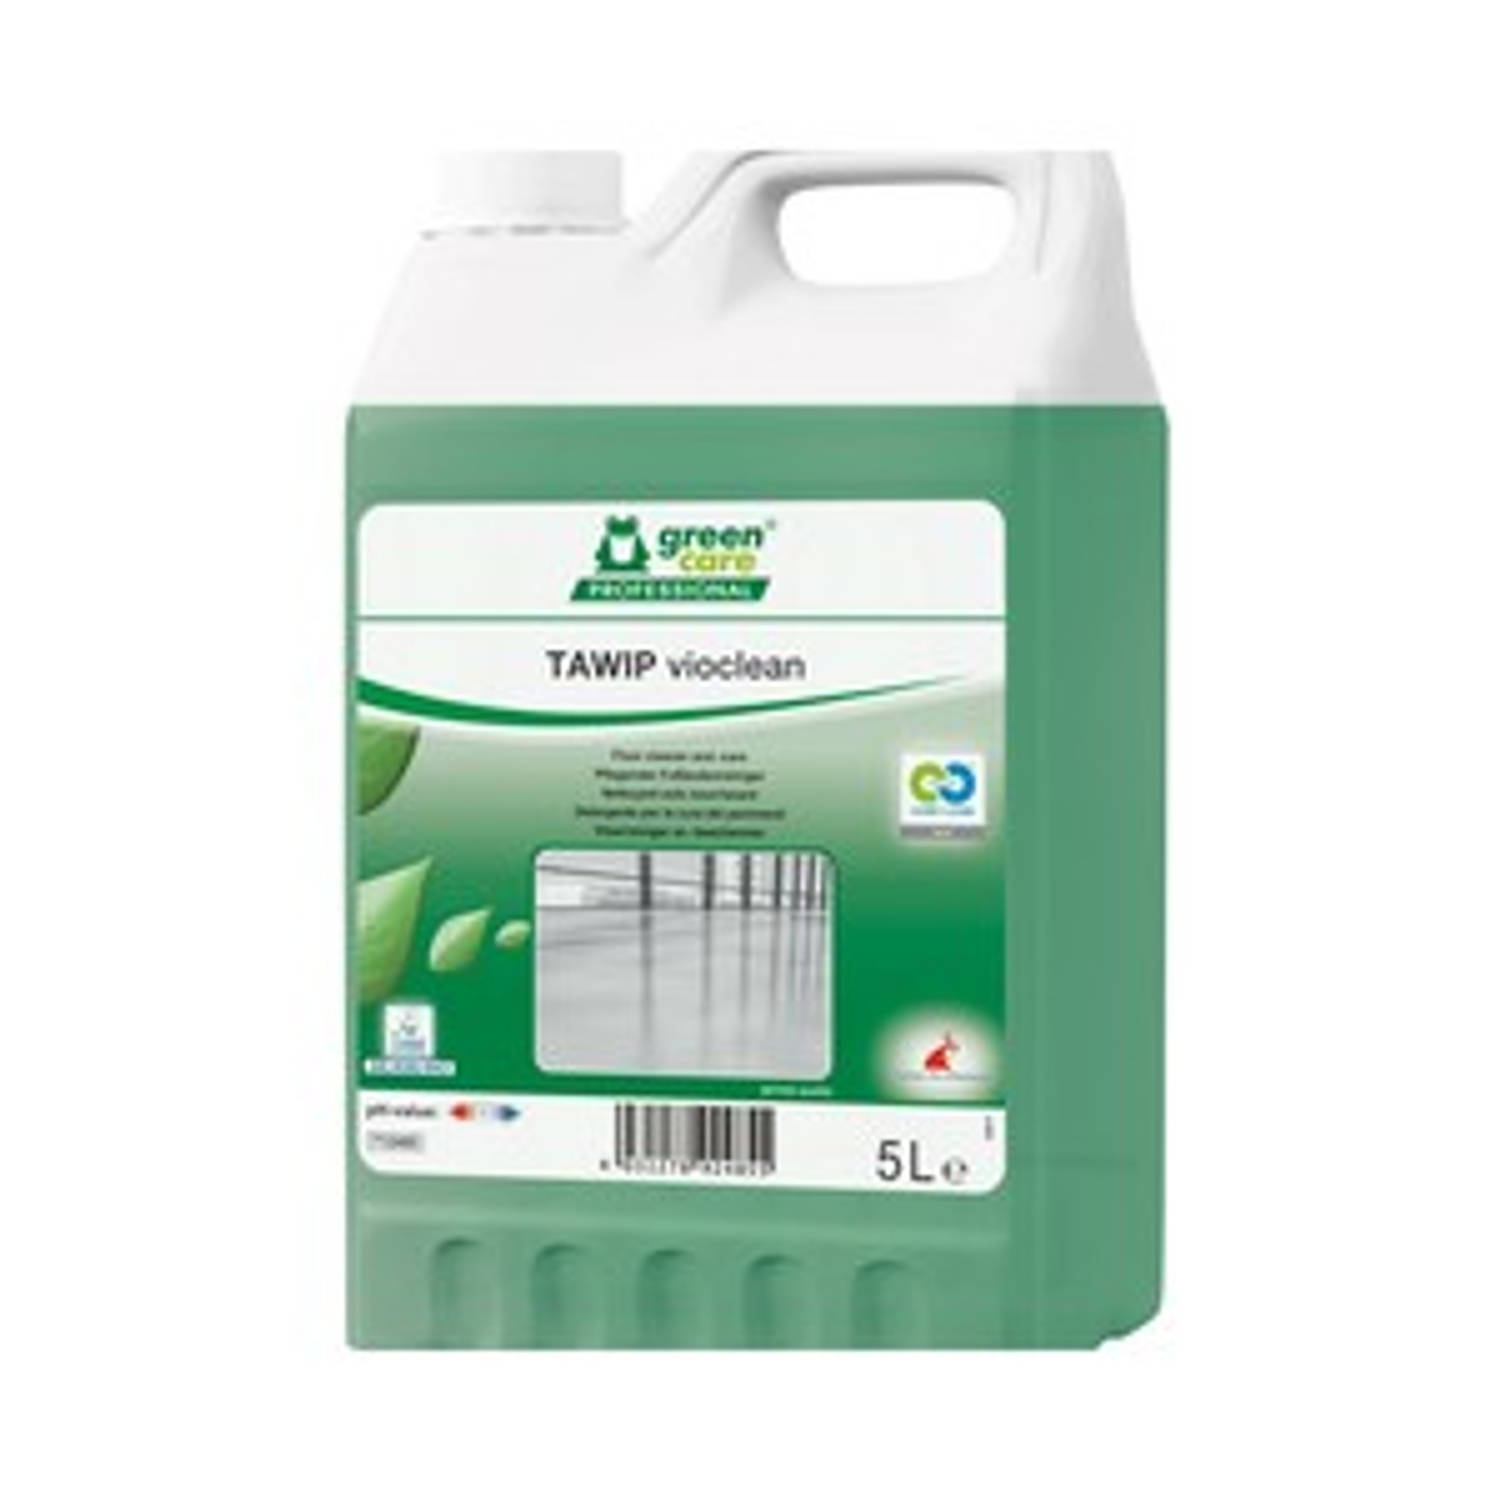 Green care tawip vioclean (5 liter)